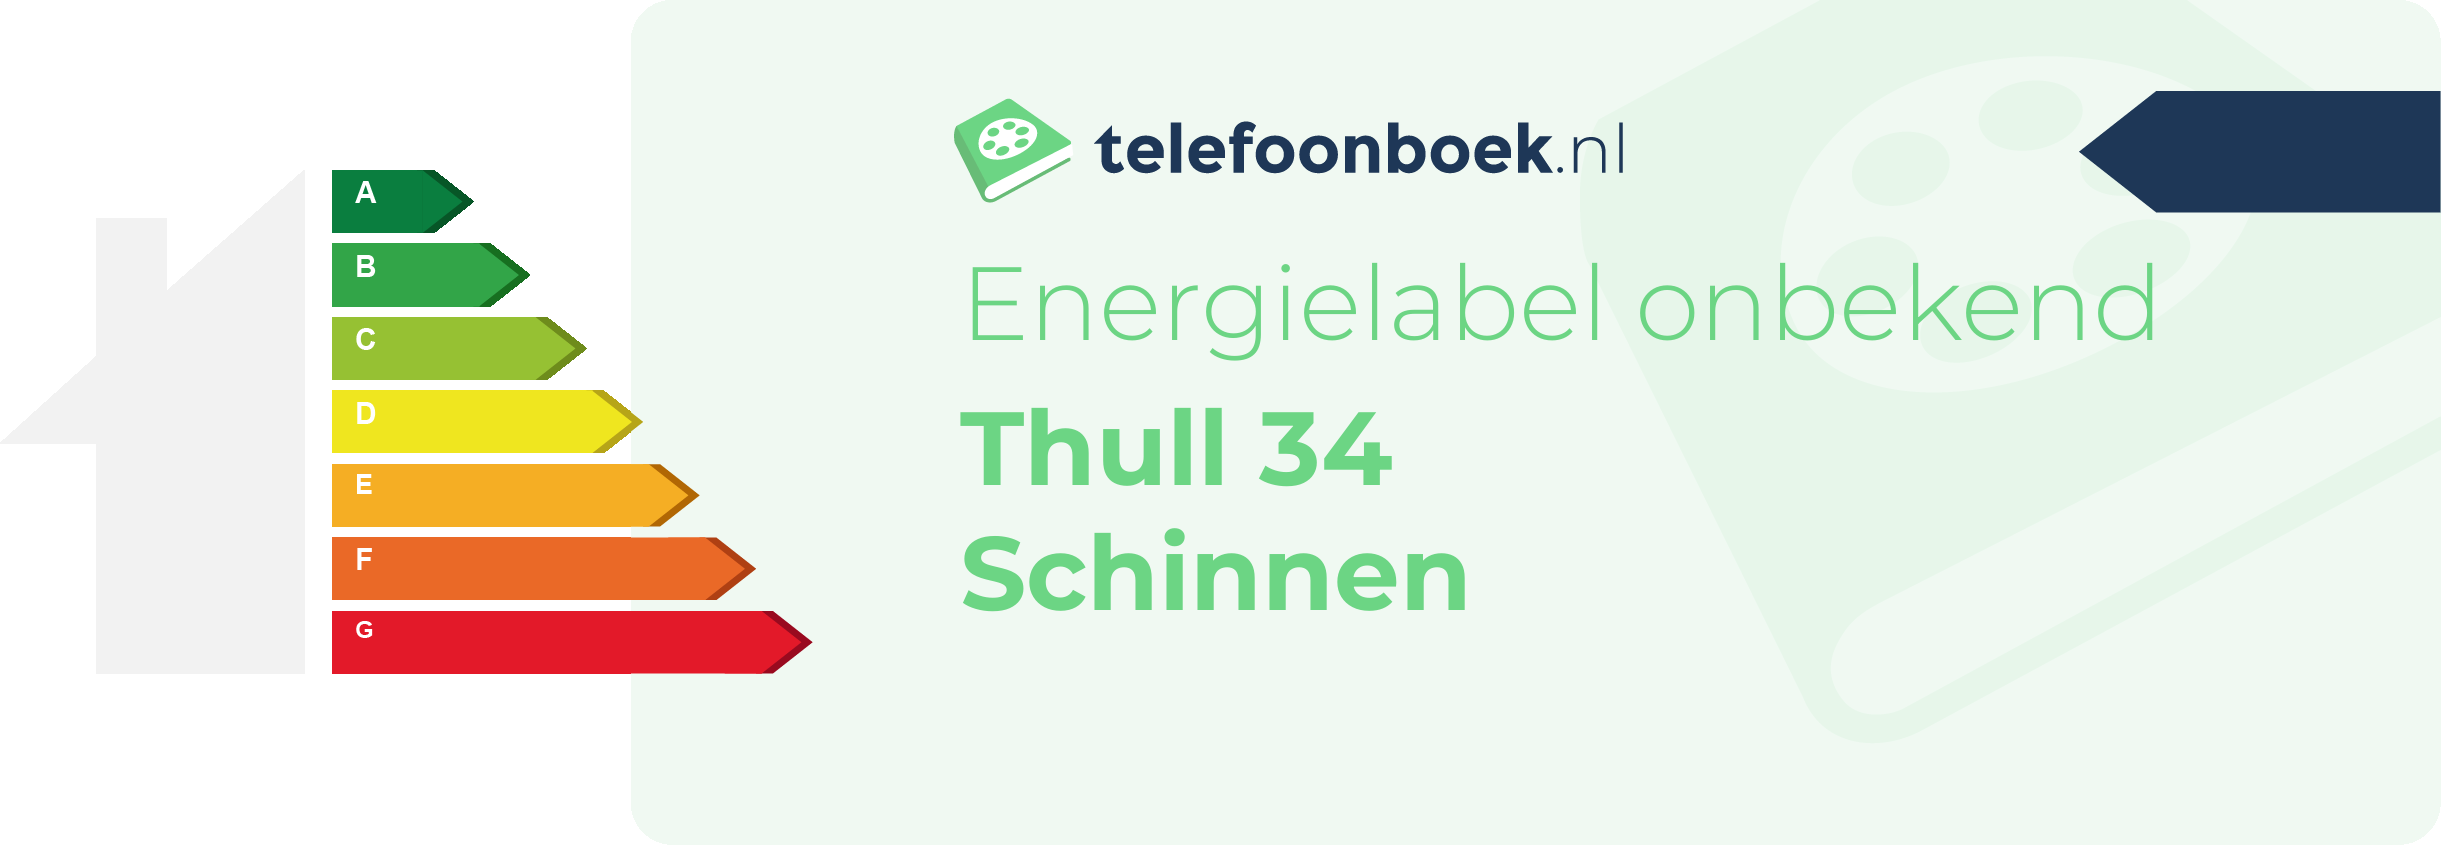 Energielabel Thull 34 Schinnen